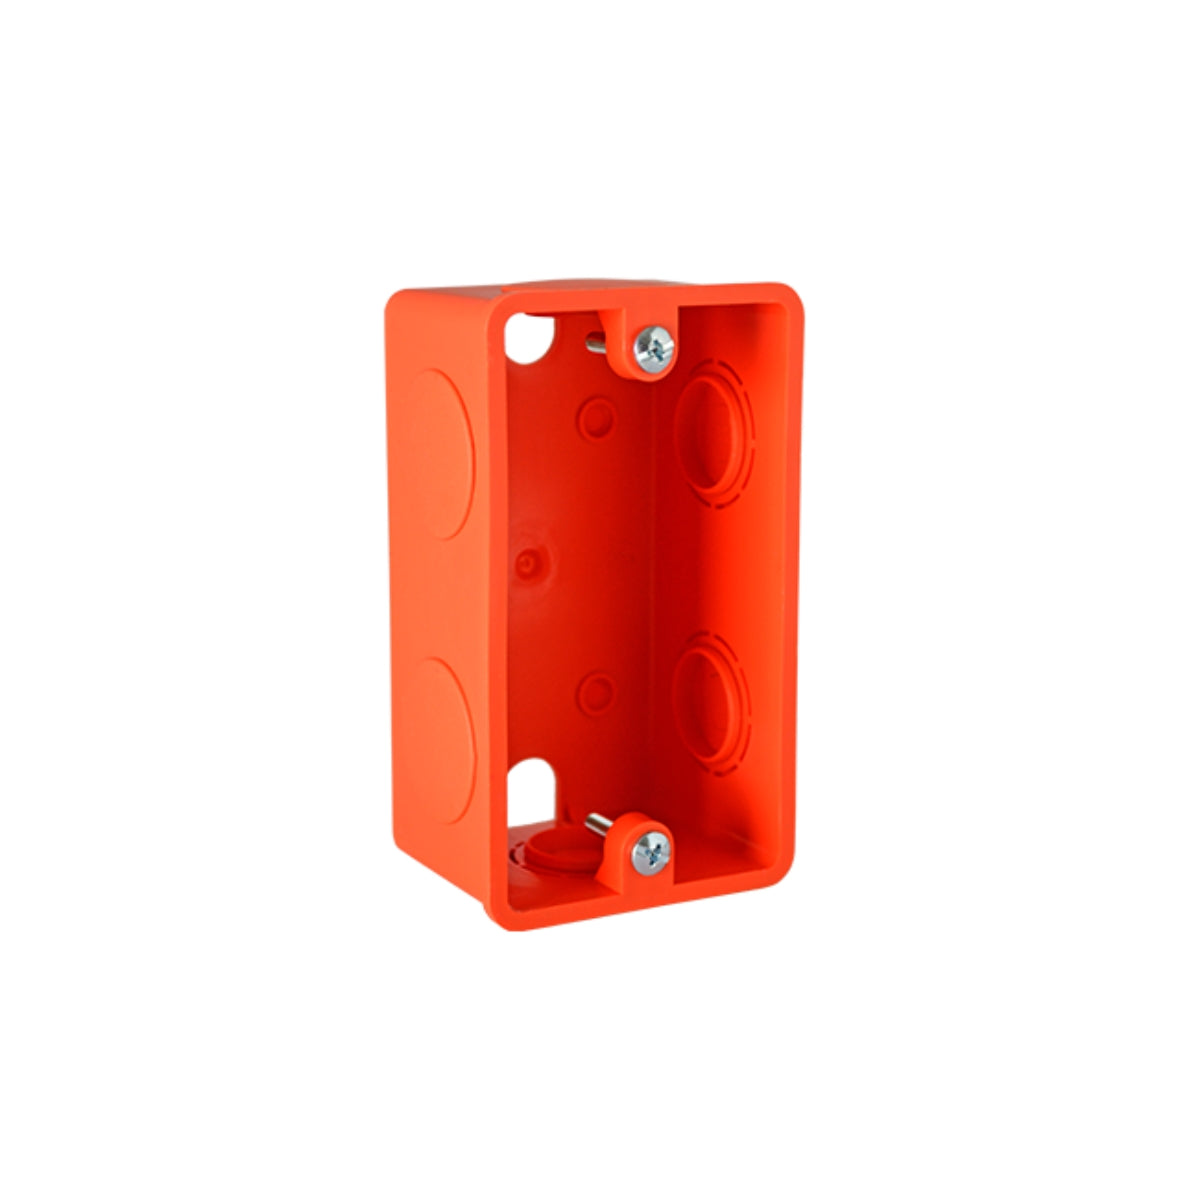 OMNI WUB-001 2 x 4 PVC Utility Box with Mounting Screw, Fire Retardant and  Shock Resistant